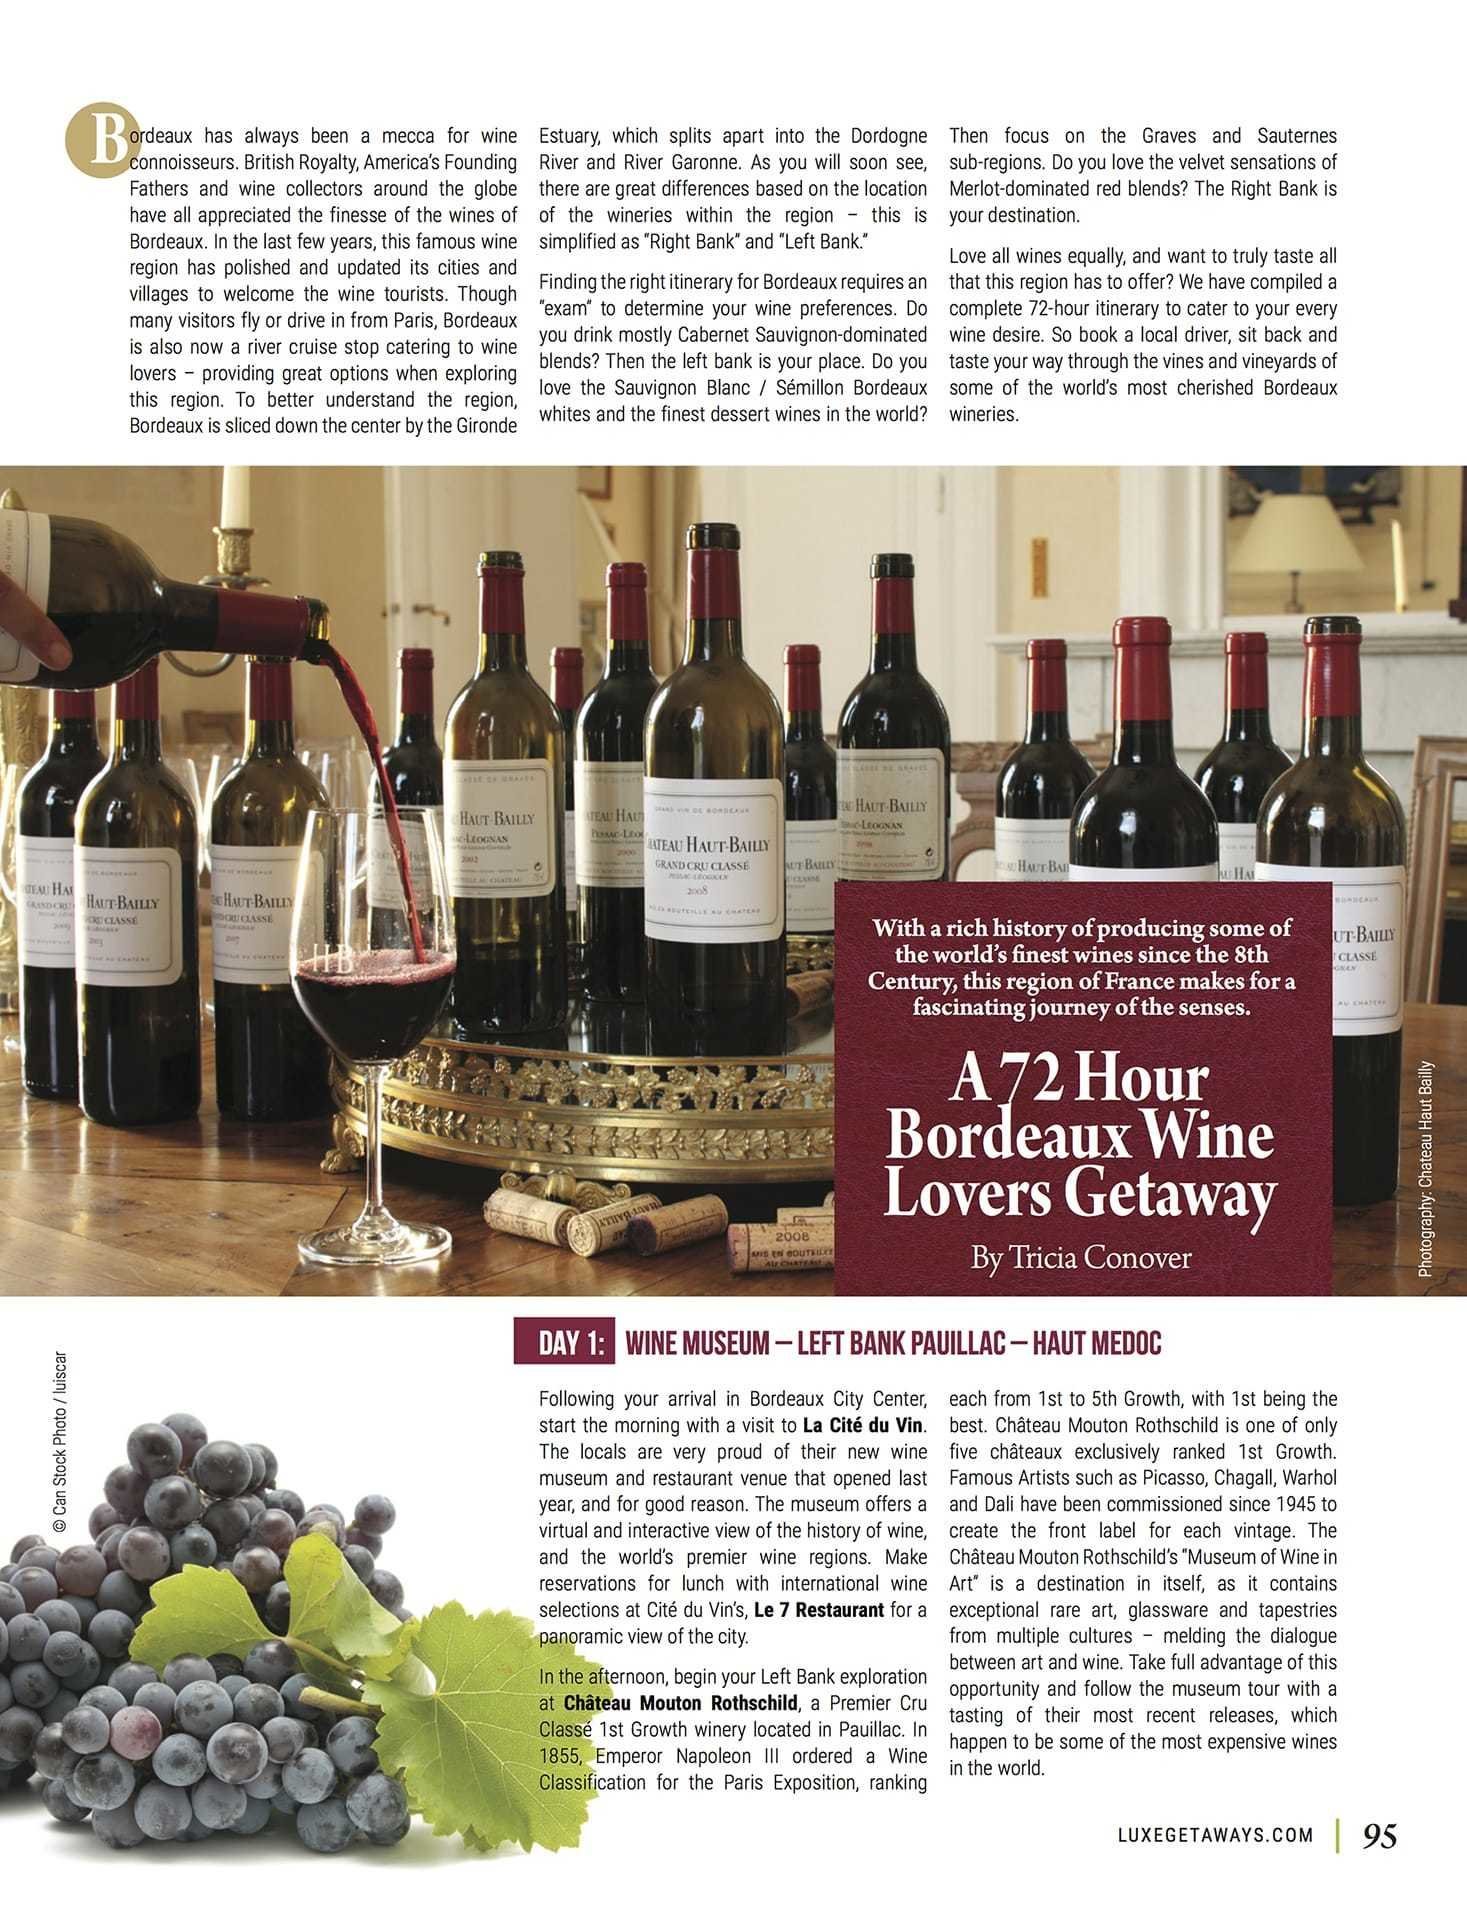 LuxeGetaways - Luxury Travel - Luxury Travel Magazine - Bordeaux Wine Getaway - Bordeaux Wine - wine travel France